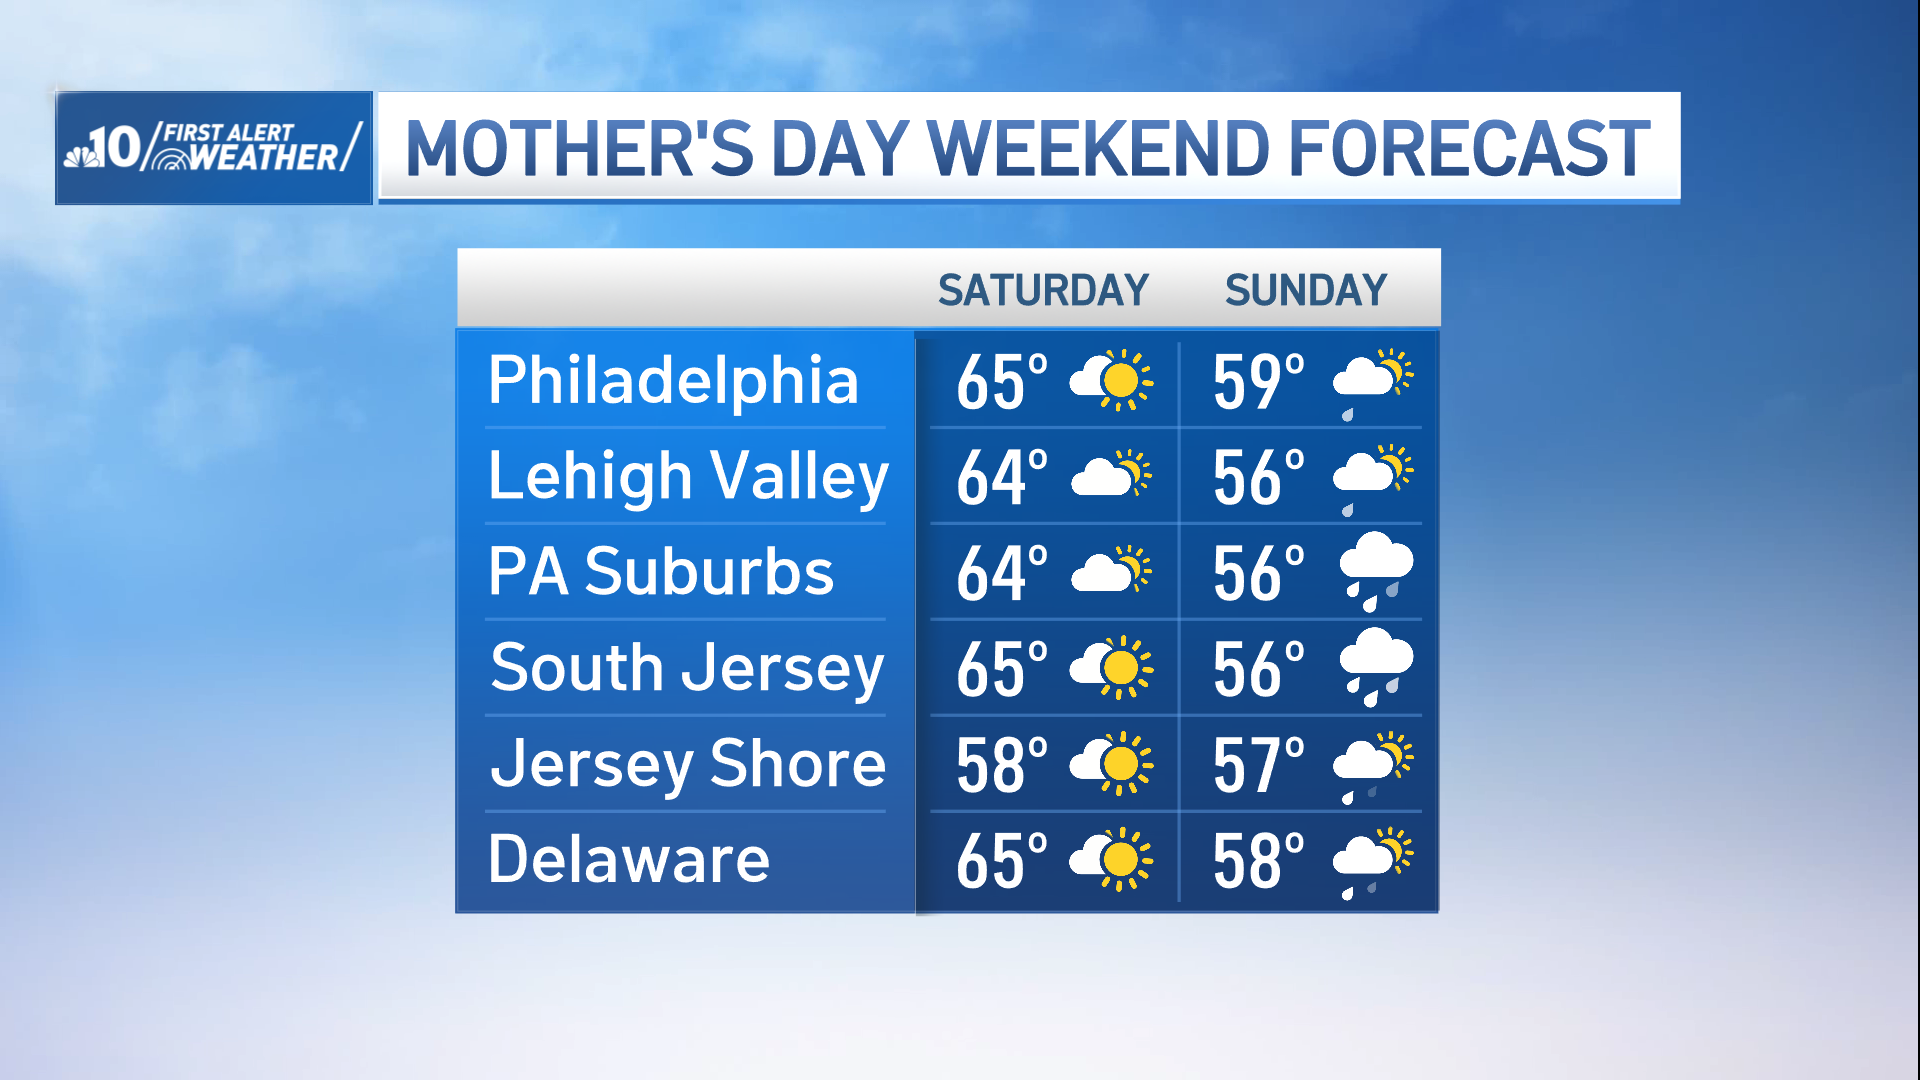 Saturday and Sunday weather forecast for Philadelphia region.